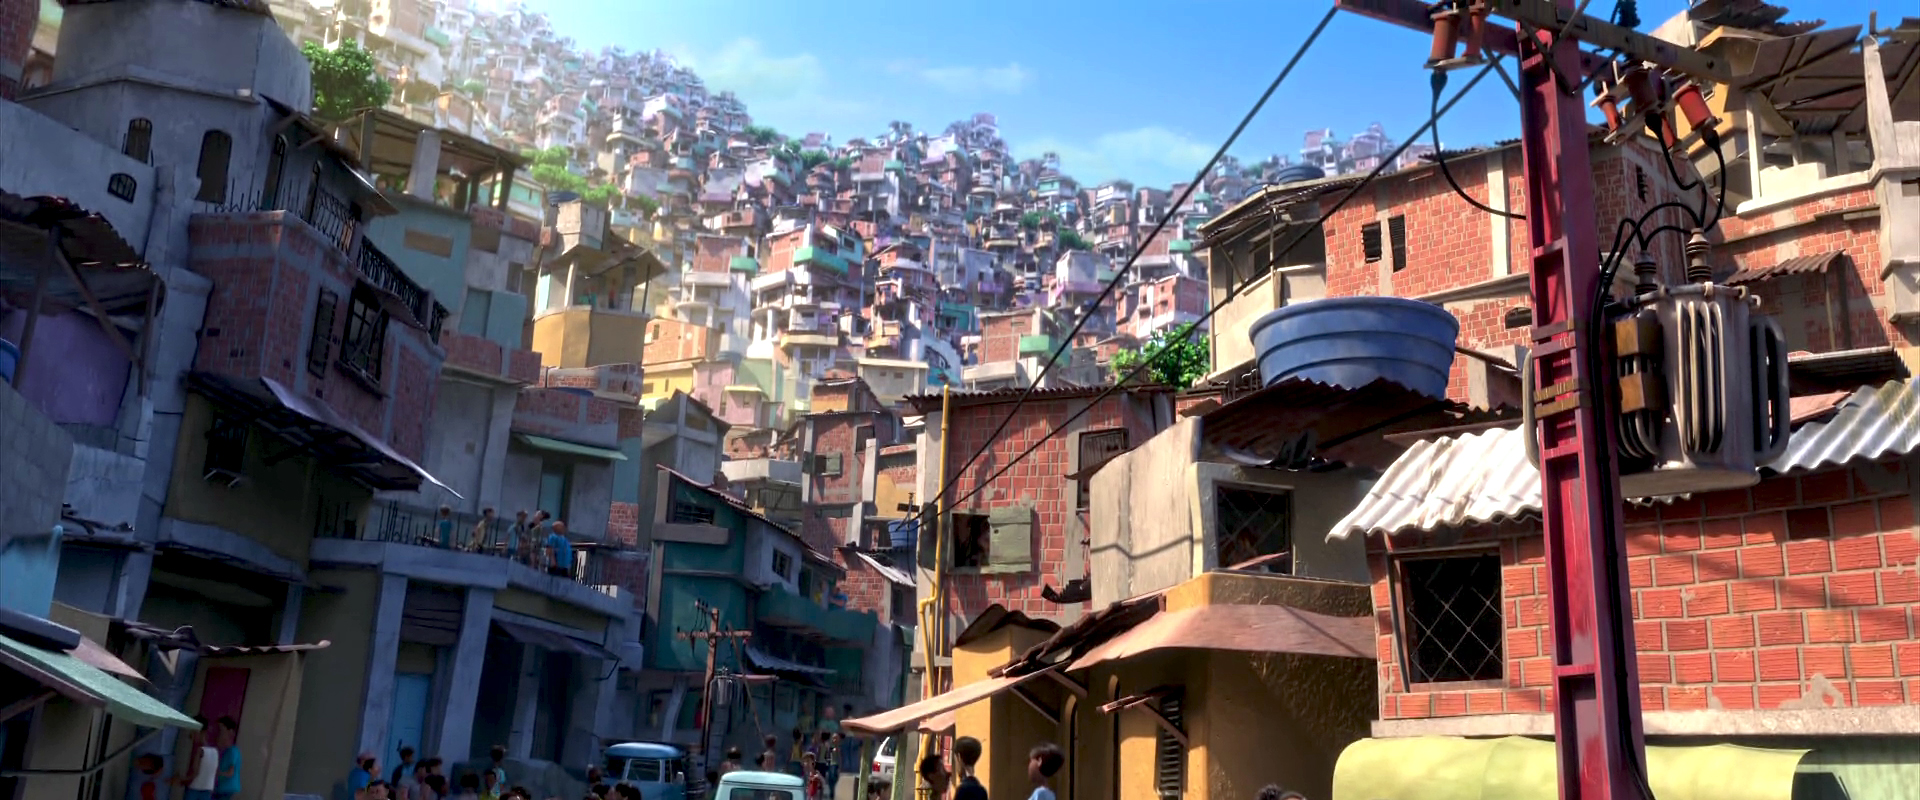 Favela Rocinha | Rio Wiki | FANDOM powered by Wikia